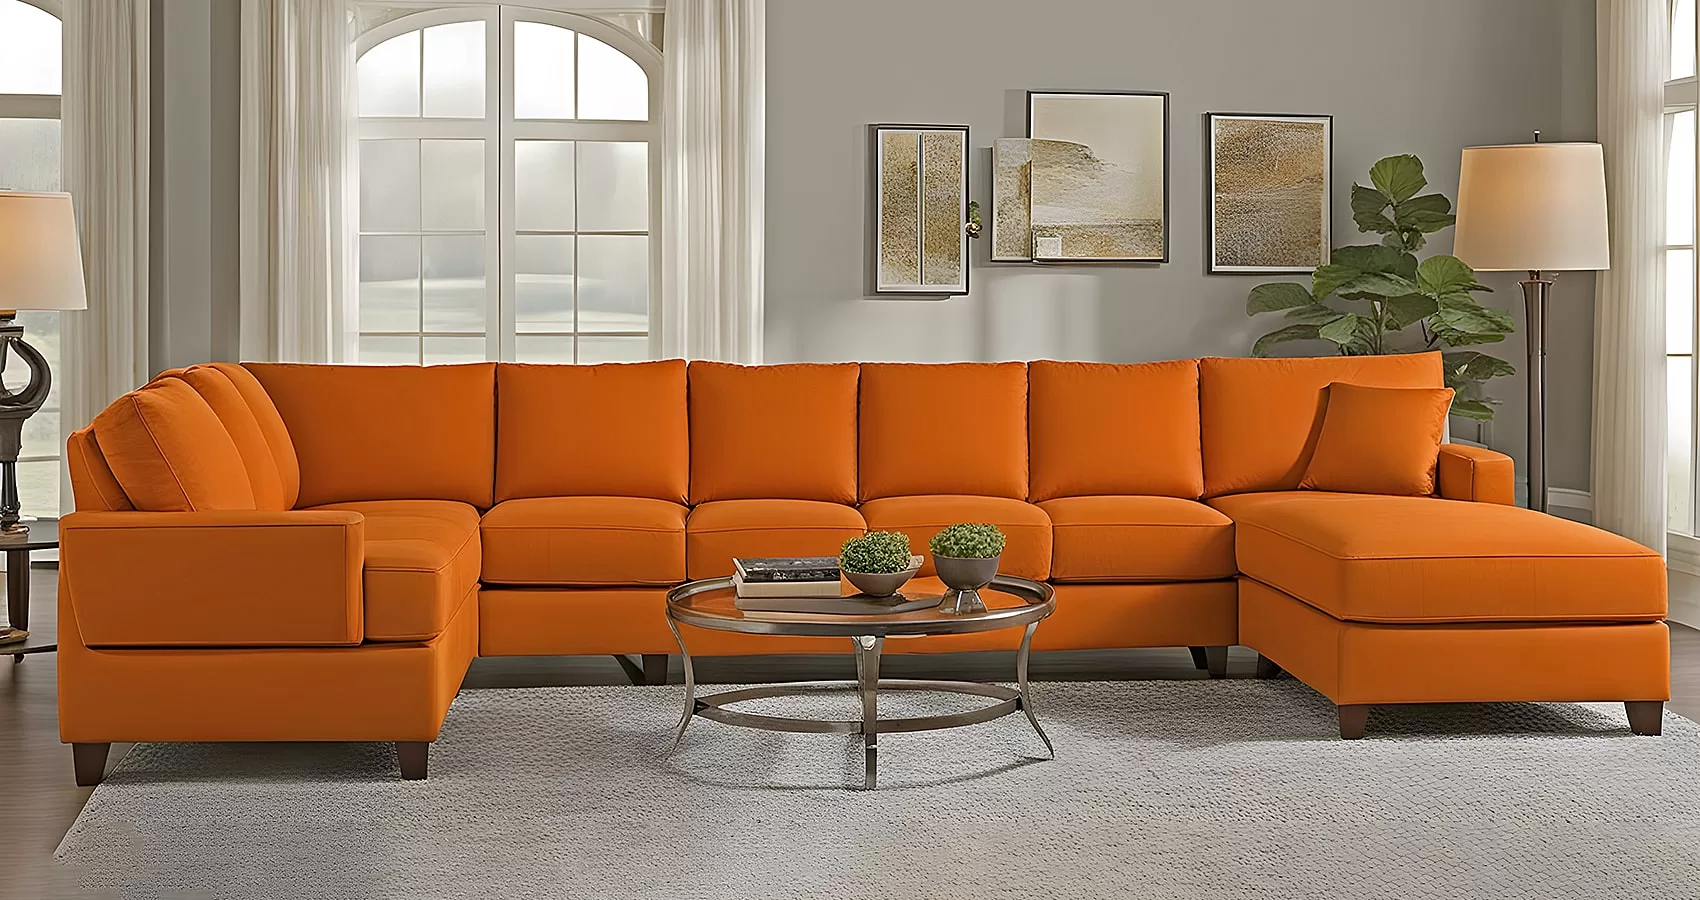 Orange Couch Sectional Min Jpg.webp